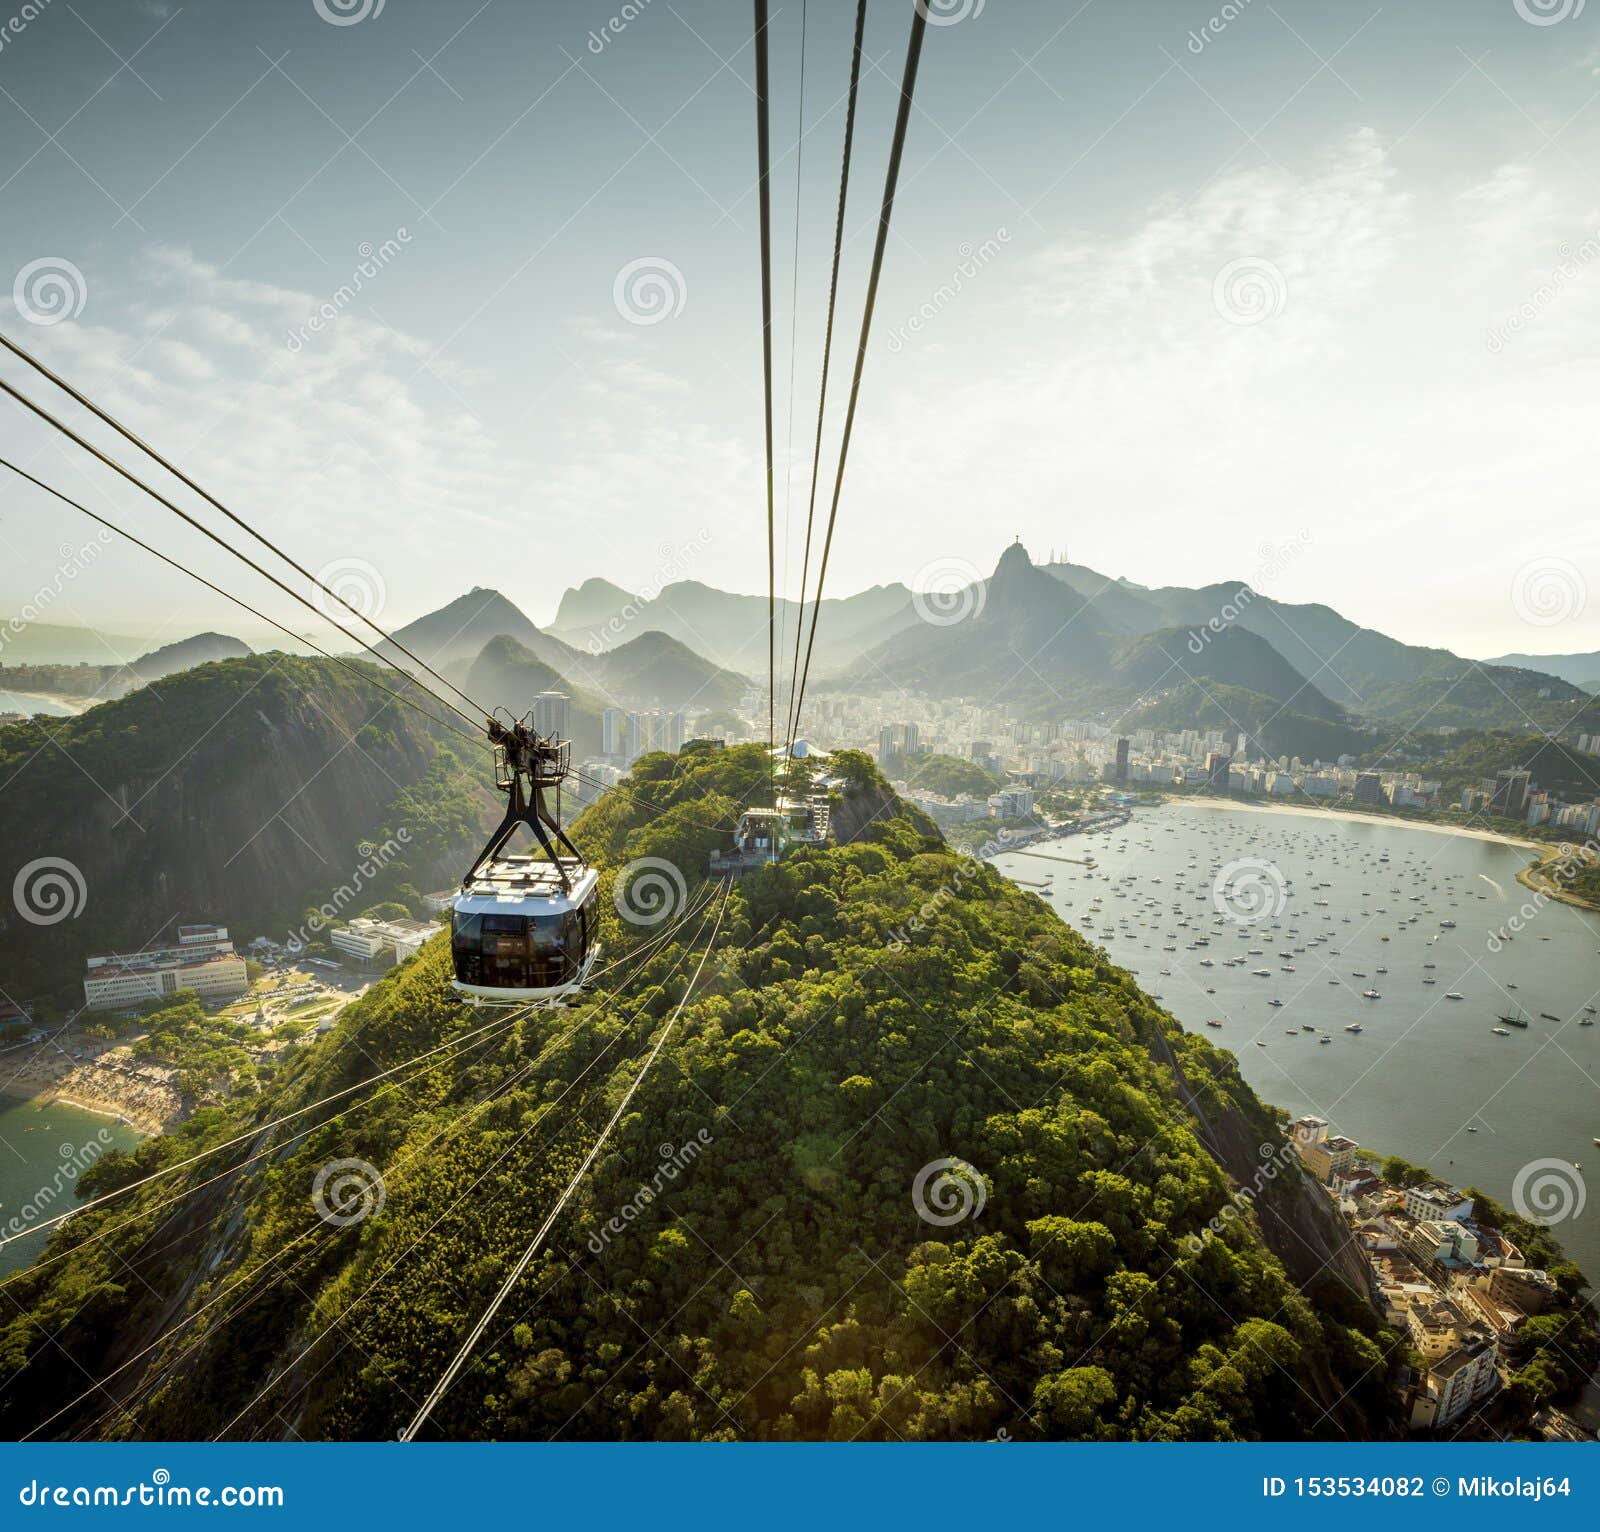 cable car going to sugarloaf mountain in rio de janeiro, brazil